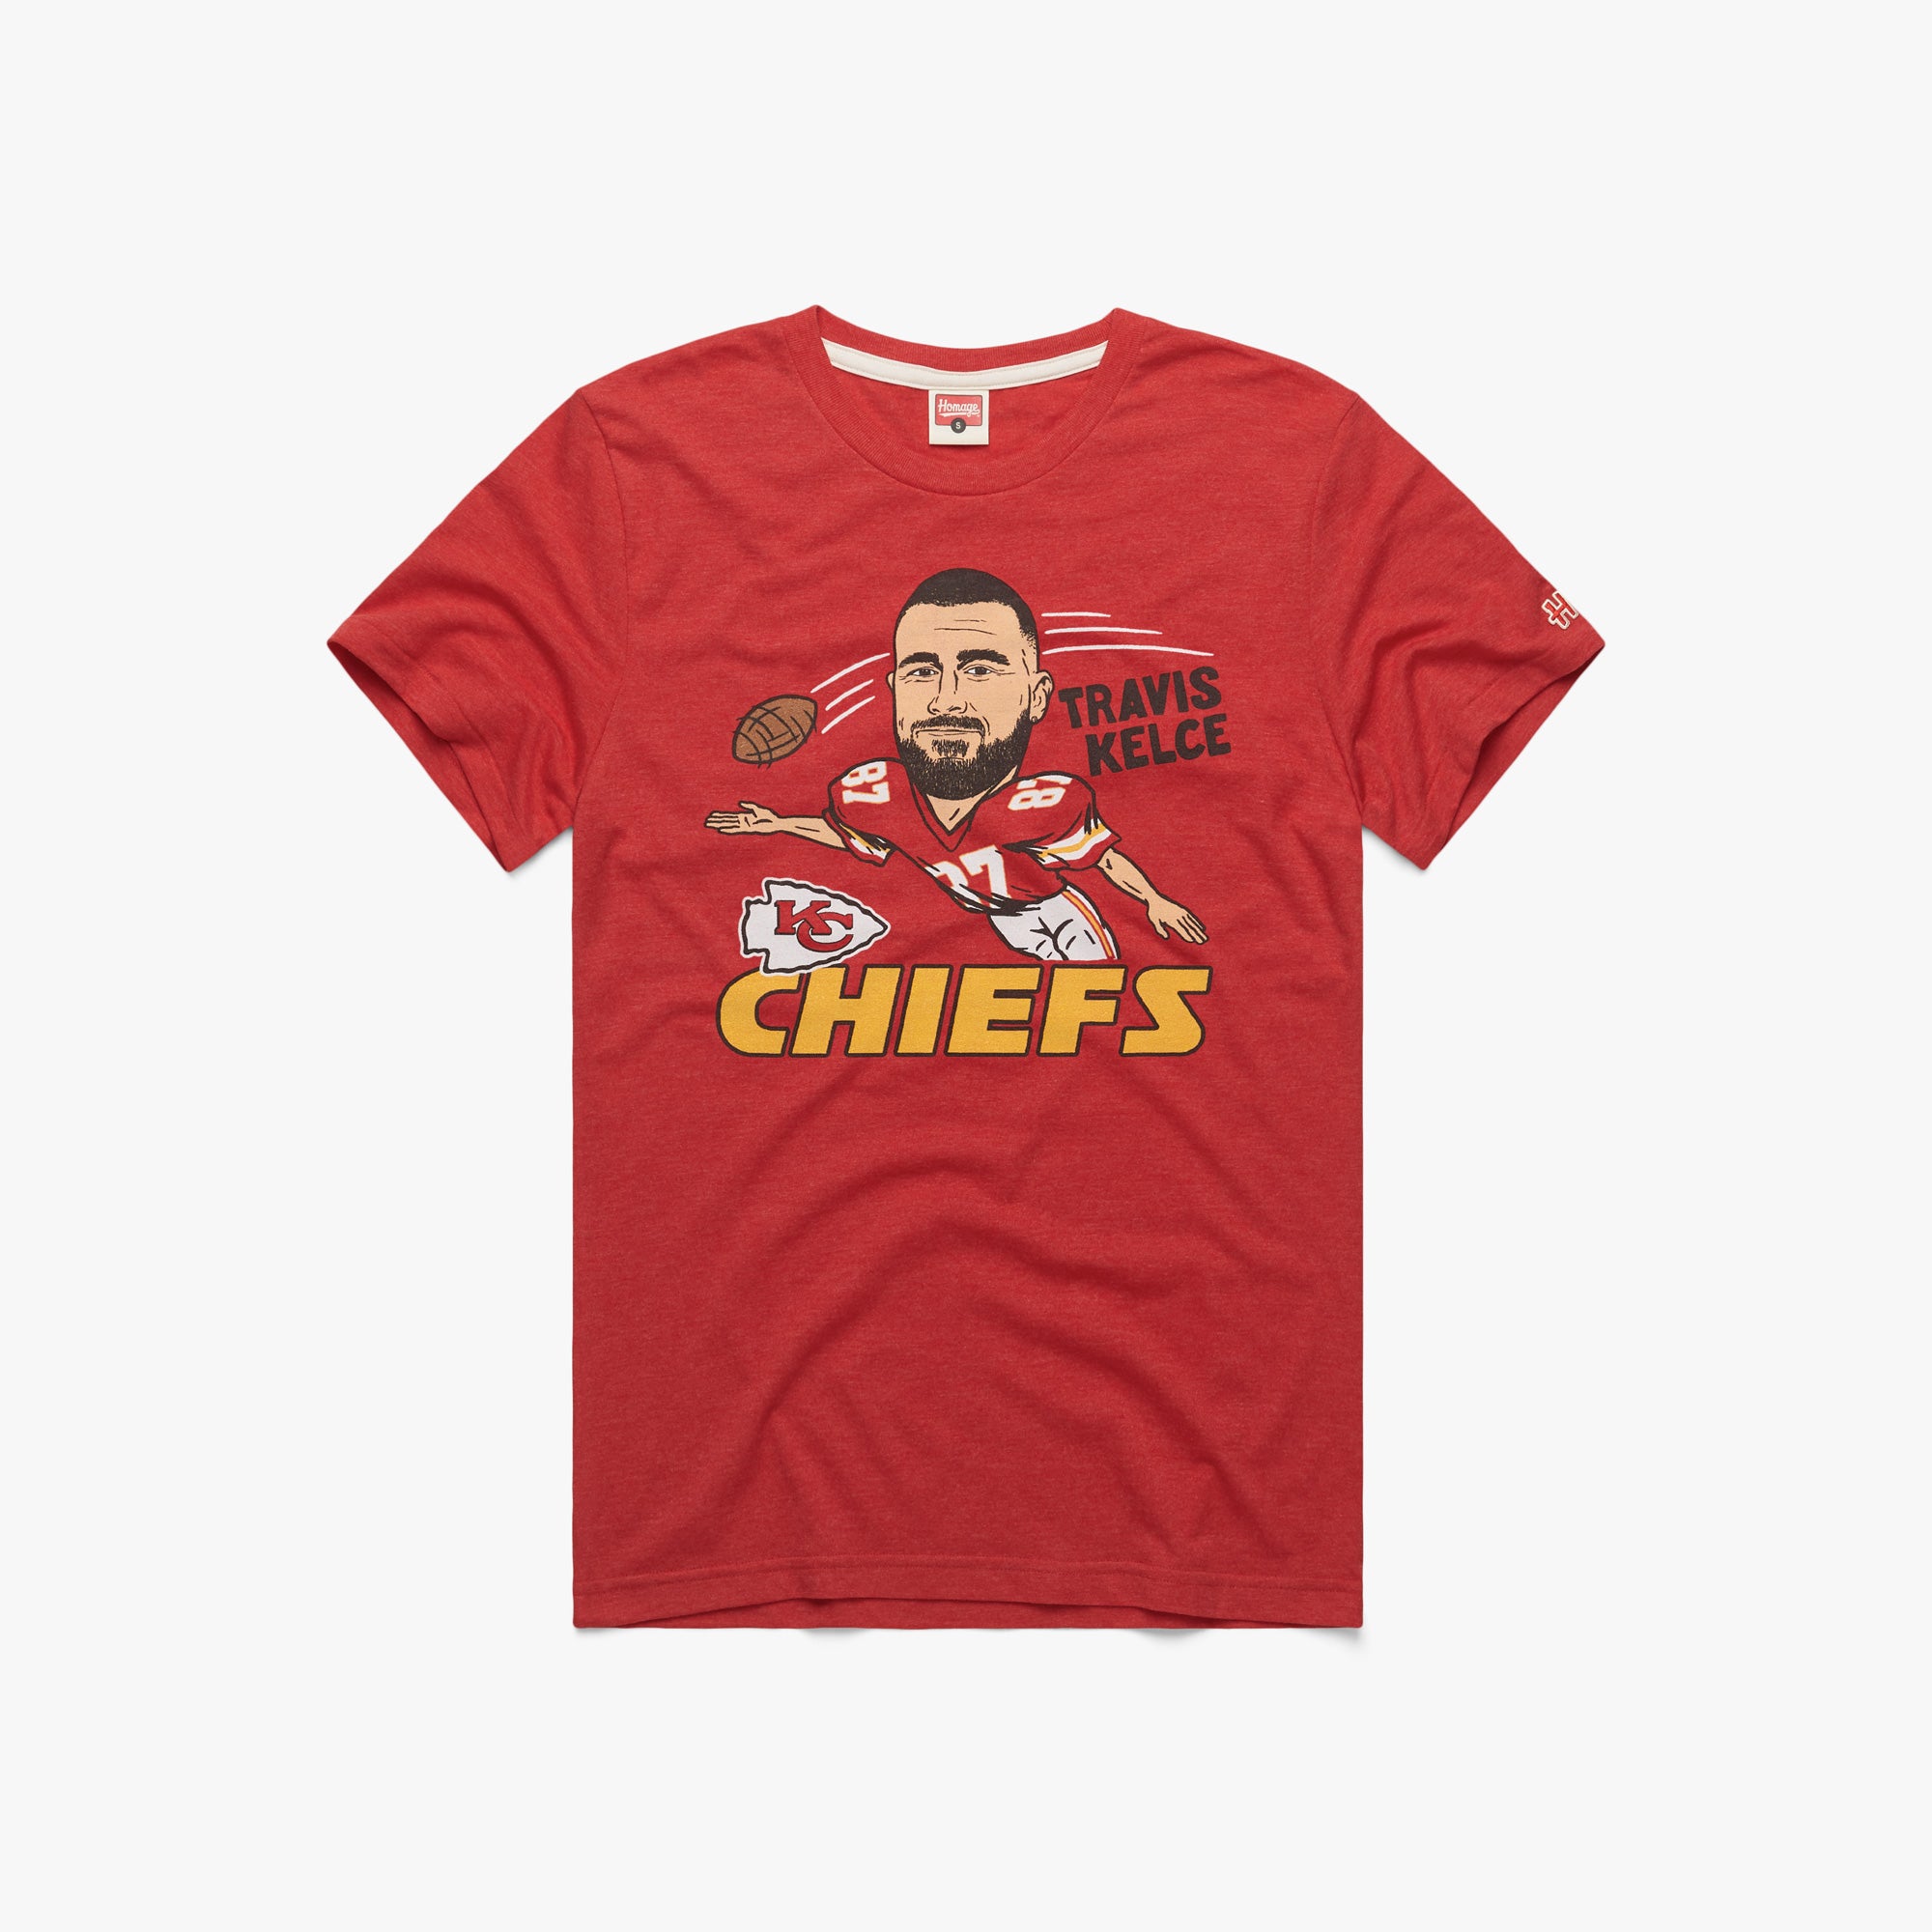 Original Travis Kelce Kansas City Chiefs Football Rocks Shirt